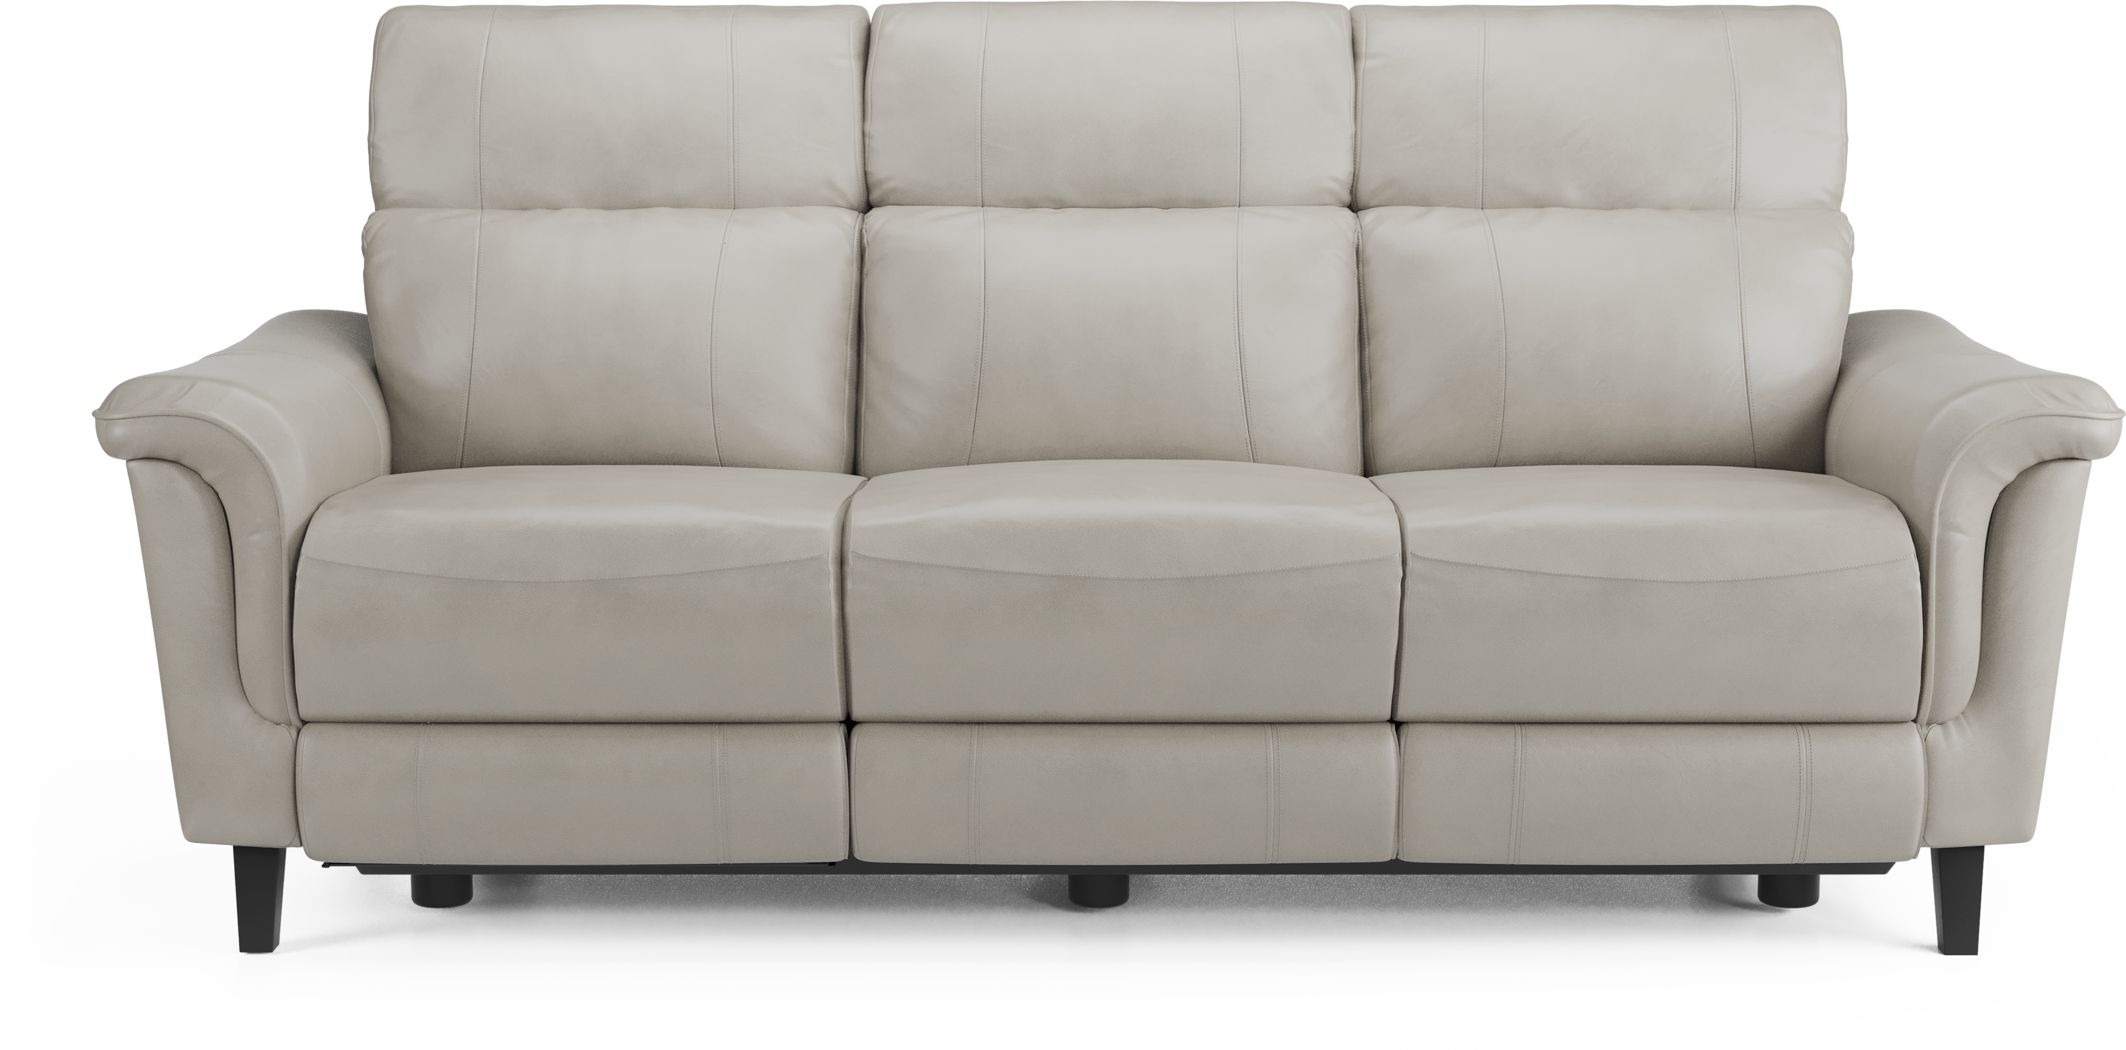 crawford top grain leather reclining sofa